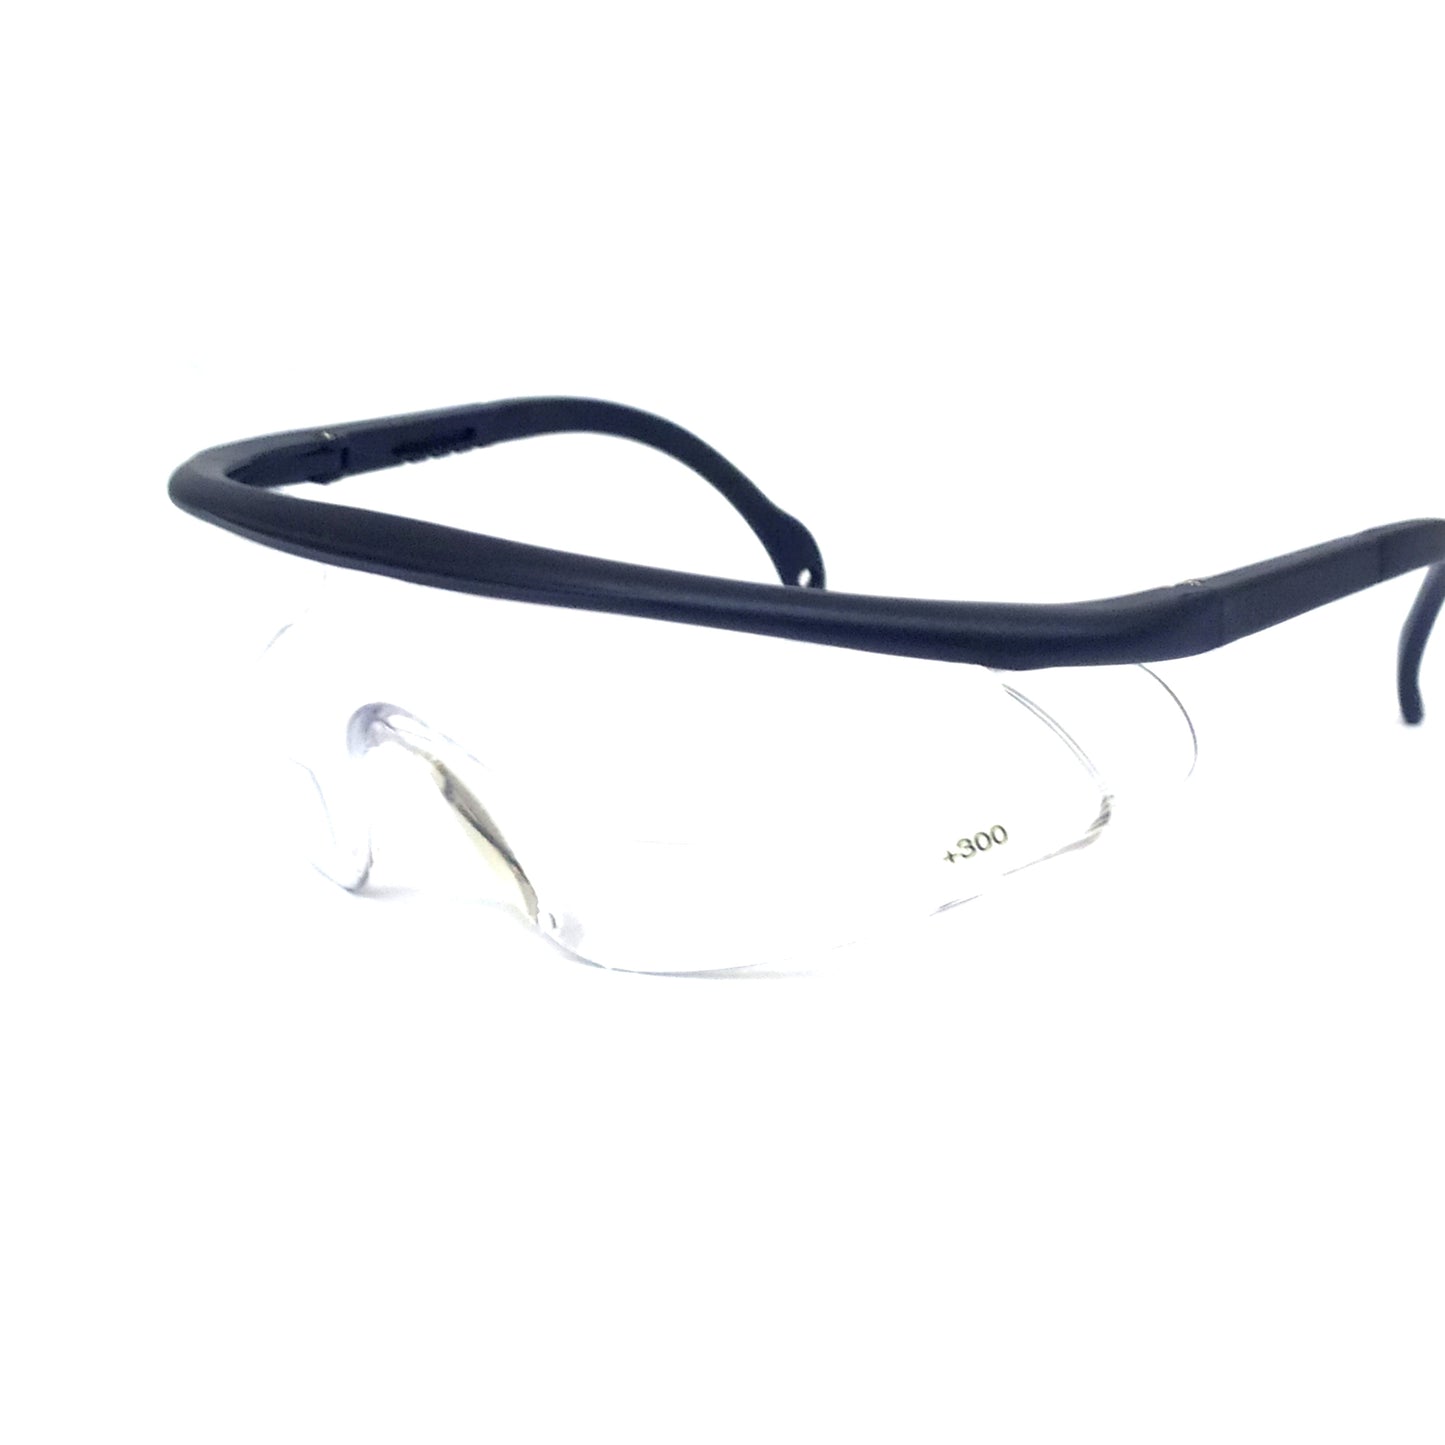 Bifocal Safety Glasses Clear +3.0 Bifocal Lens with Black Frame